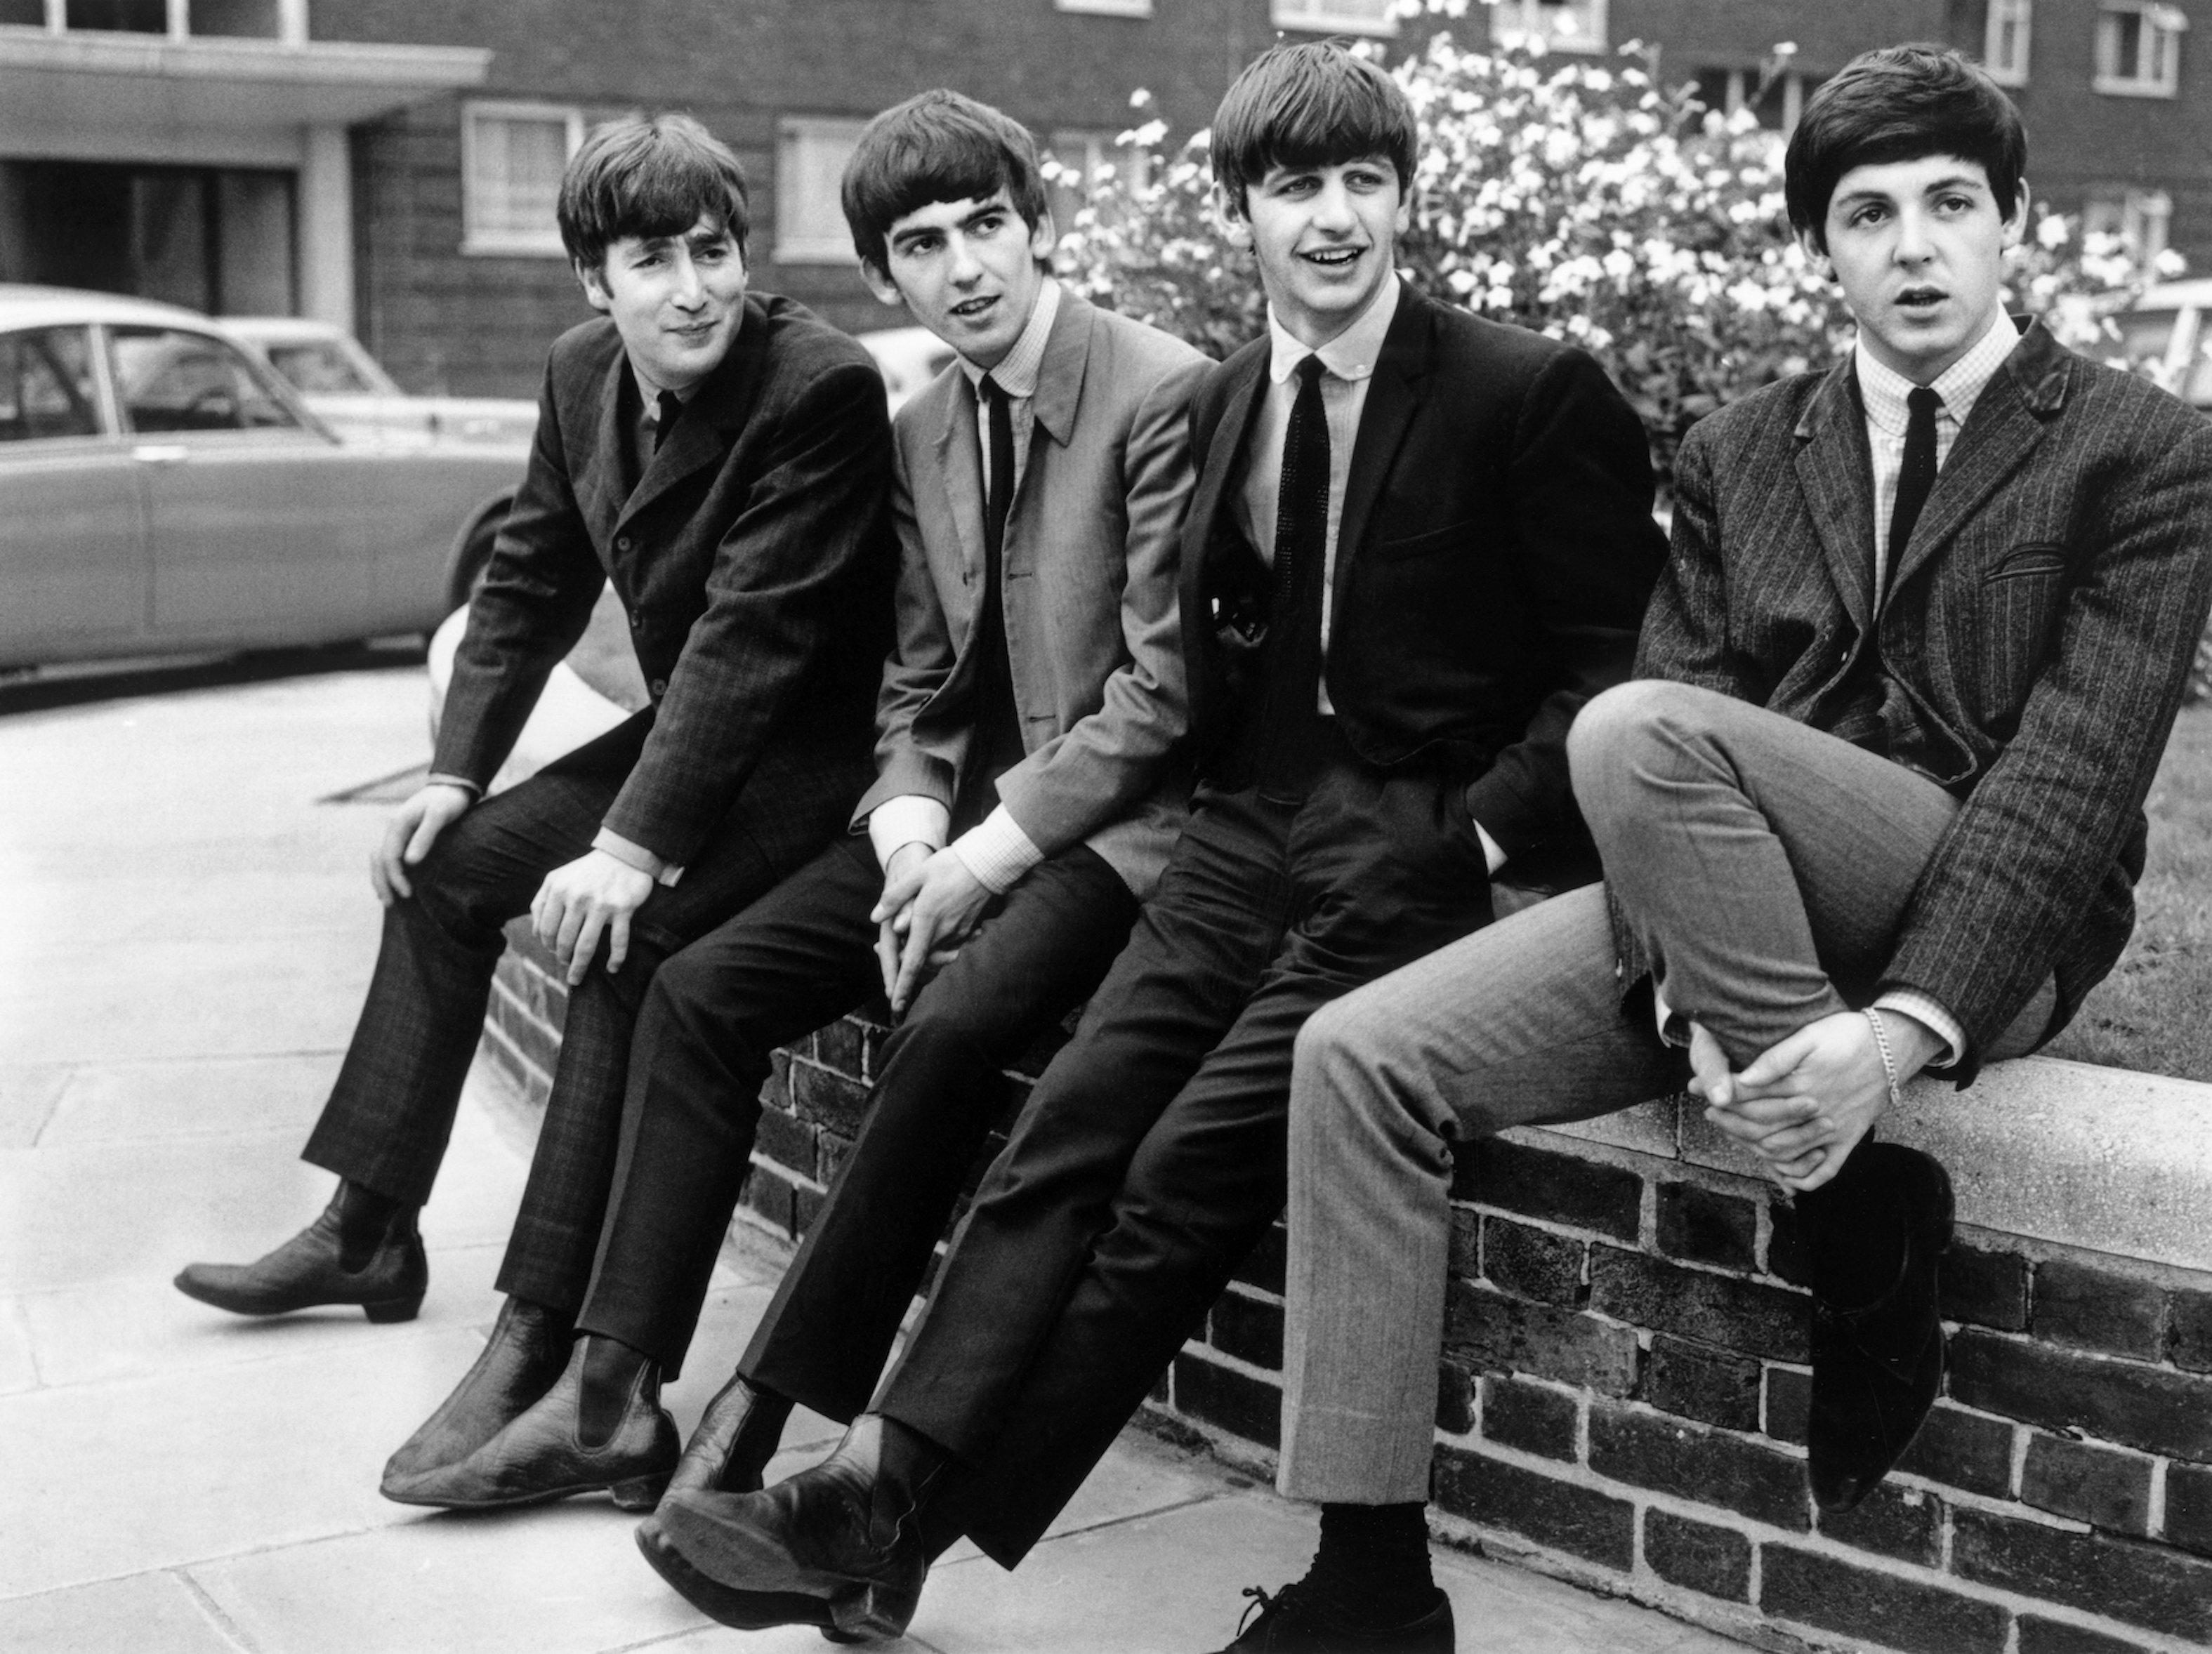 The Beatles members John Lennon, George Harrison, Ringo Starr, and Paul McCartney